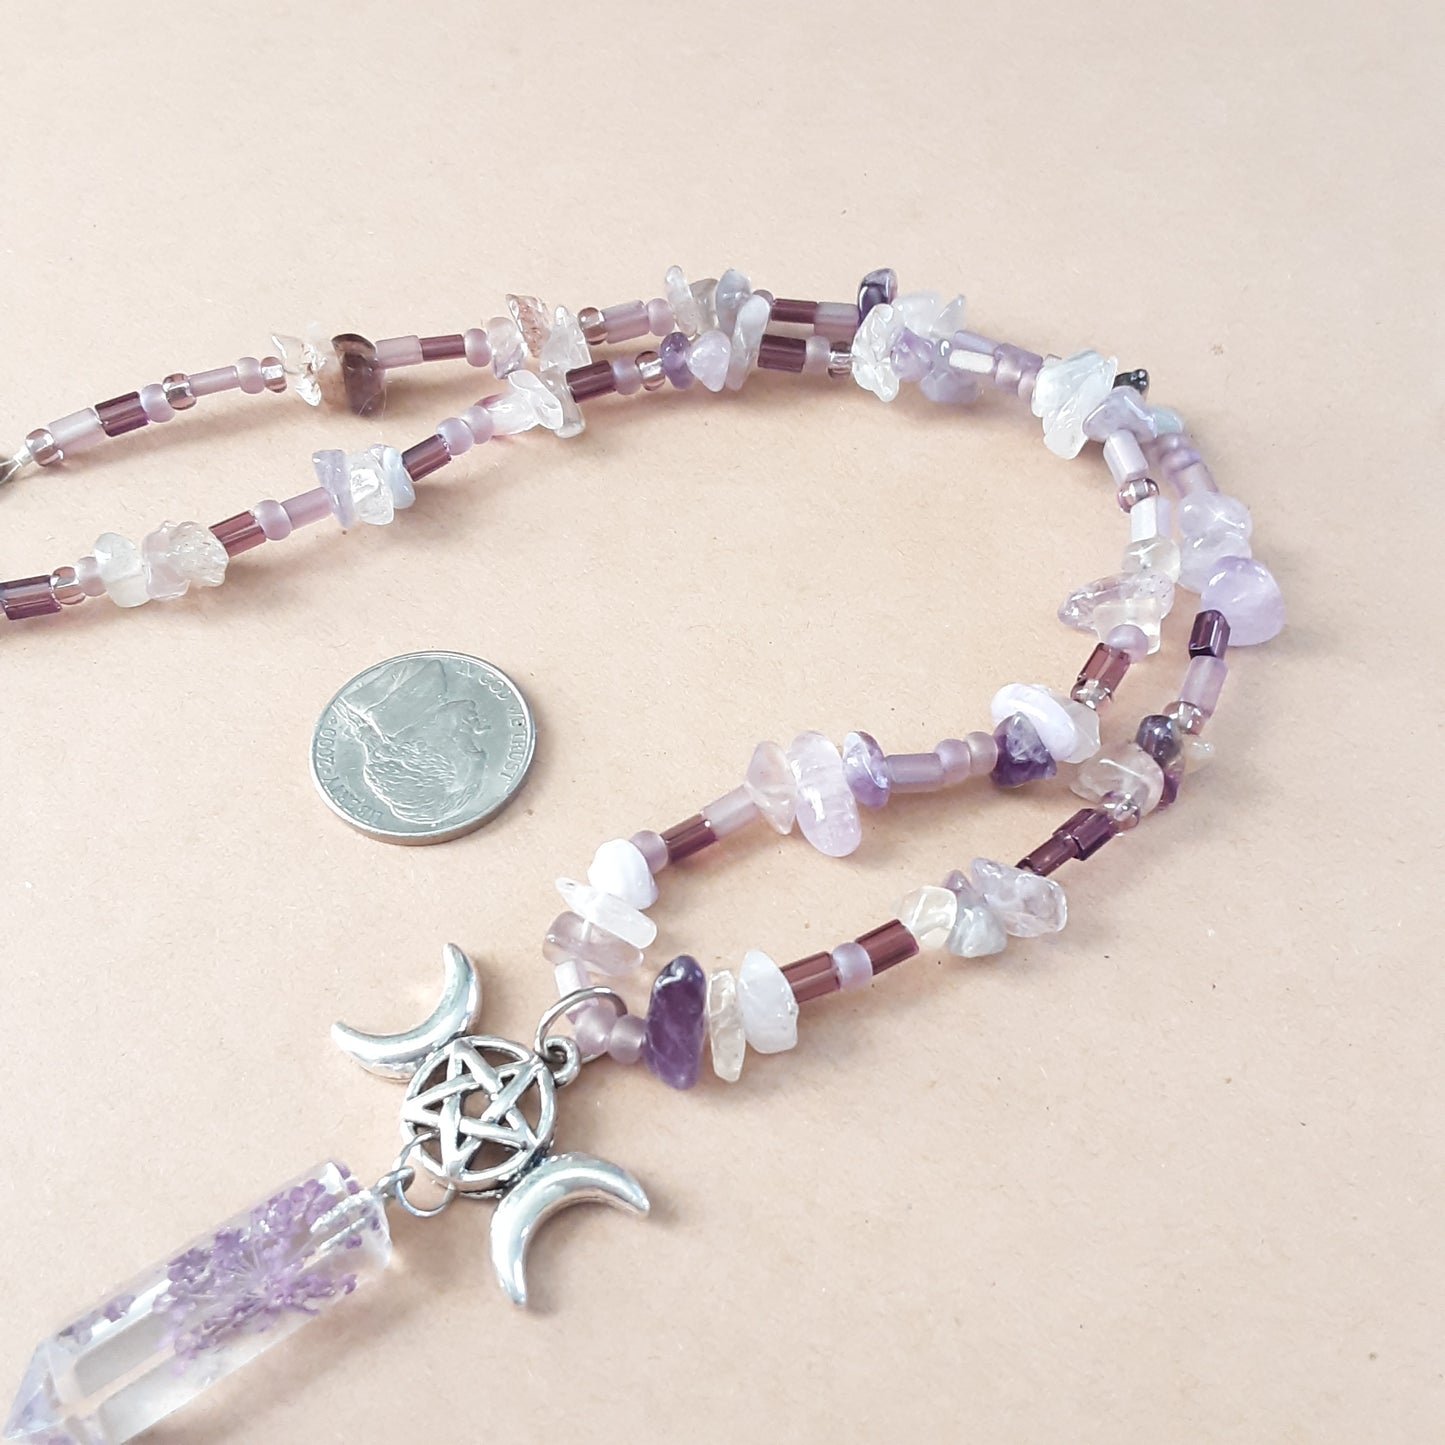 Spring Goddess Necklace with Fluorite gemstone chips